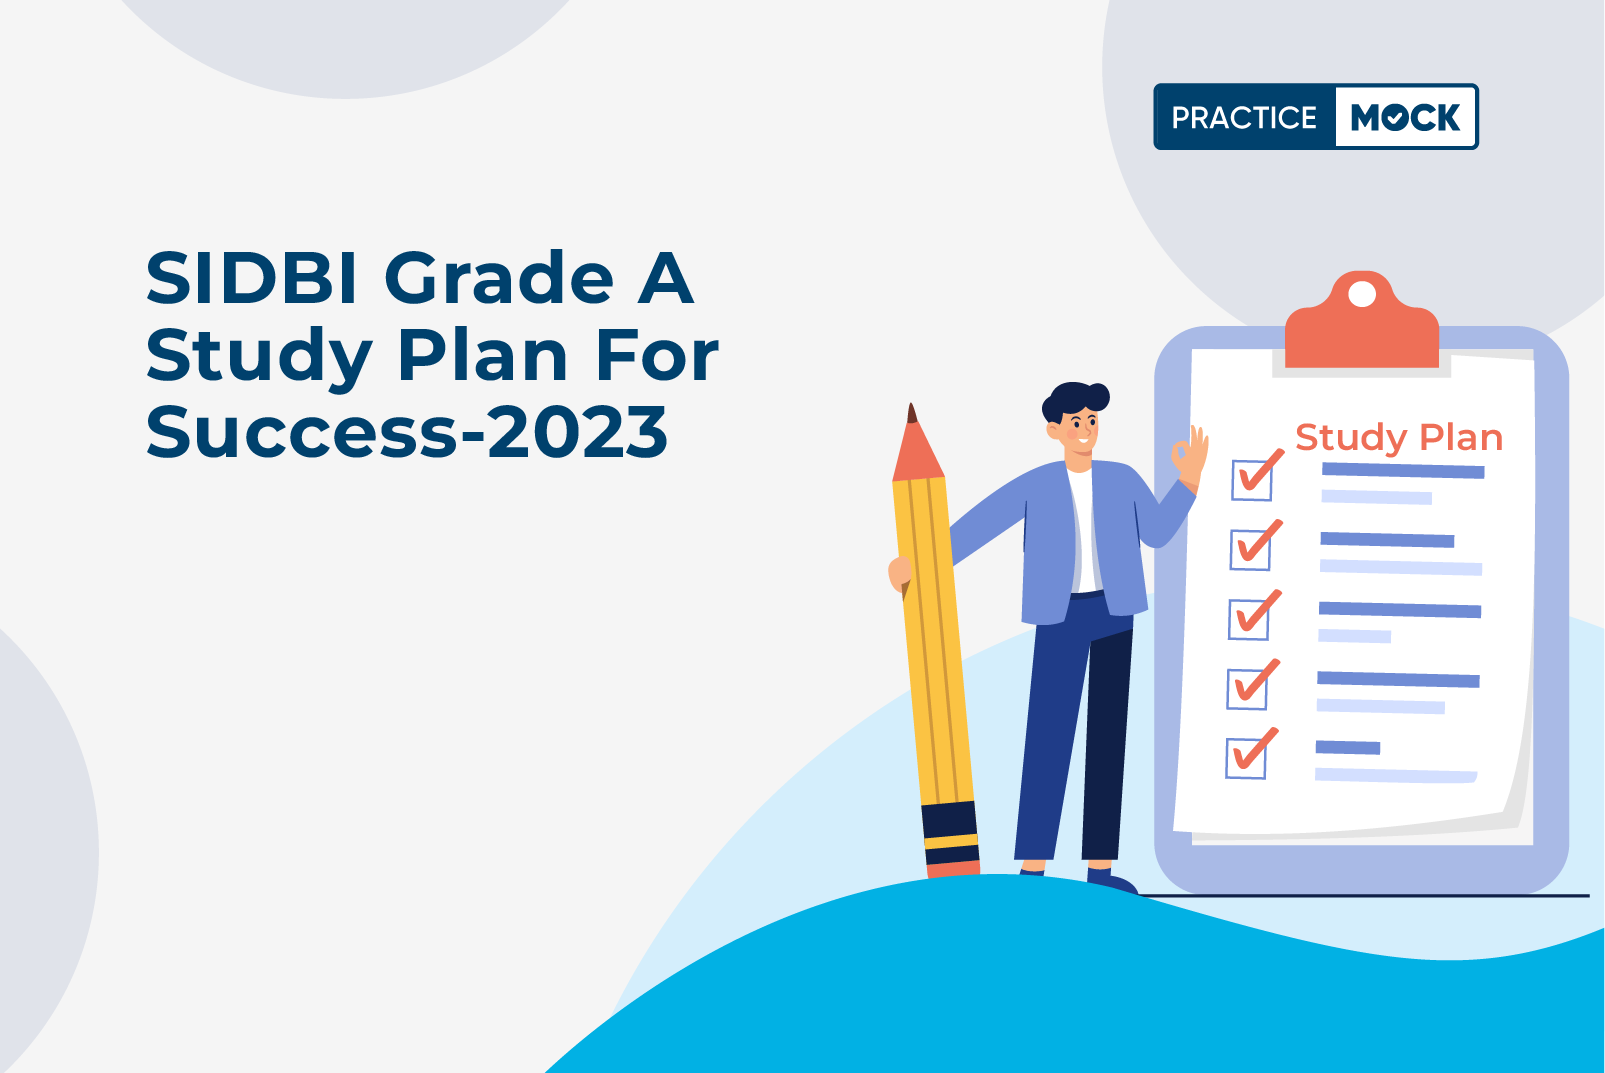 SIDBI Grade A 2023 Study Plan